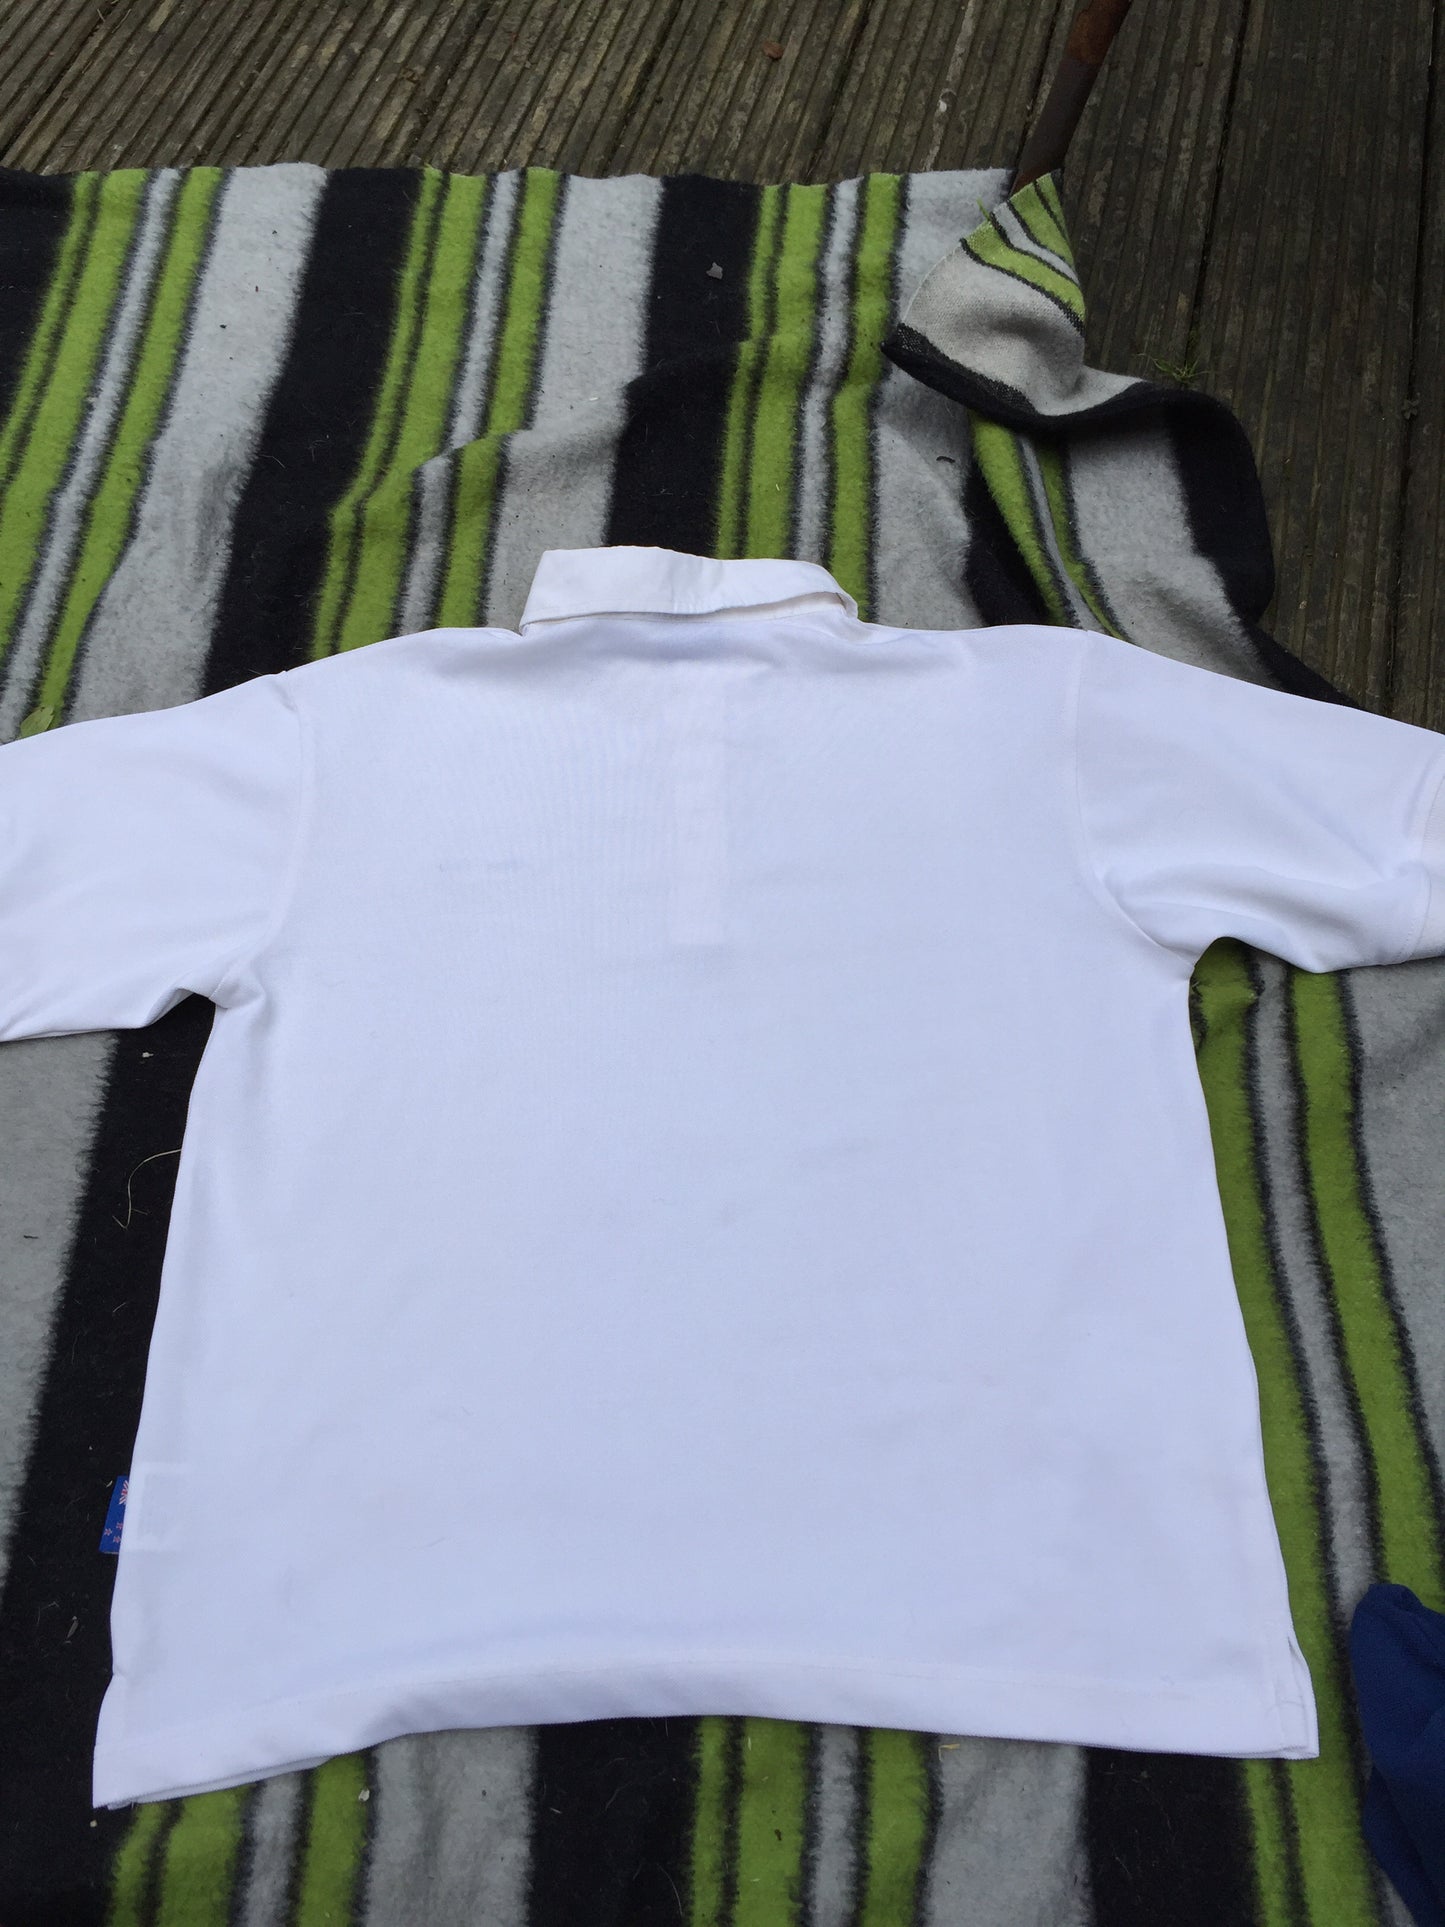 Mark Todd white shirt sleeve polo shirt size S (8/10)FREE POSTAGE